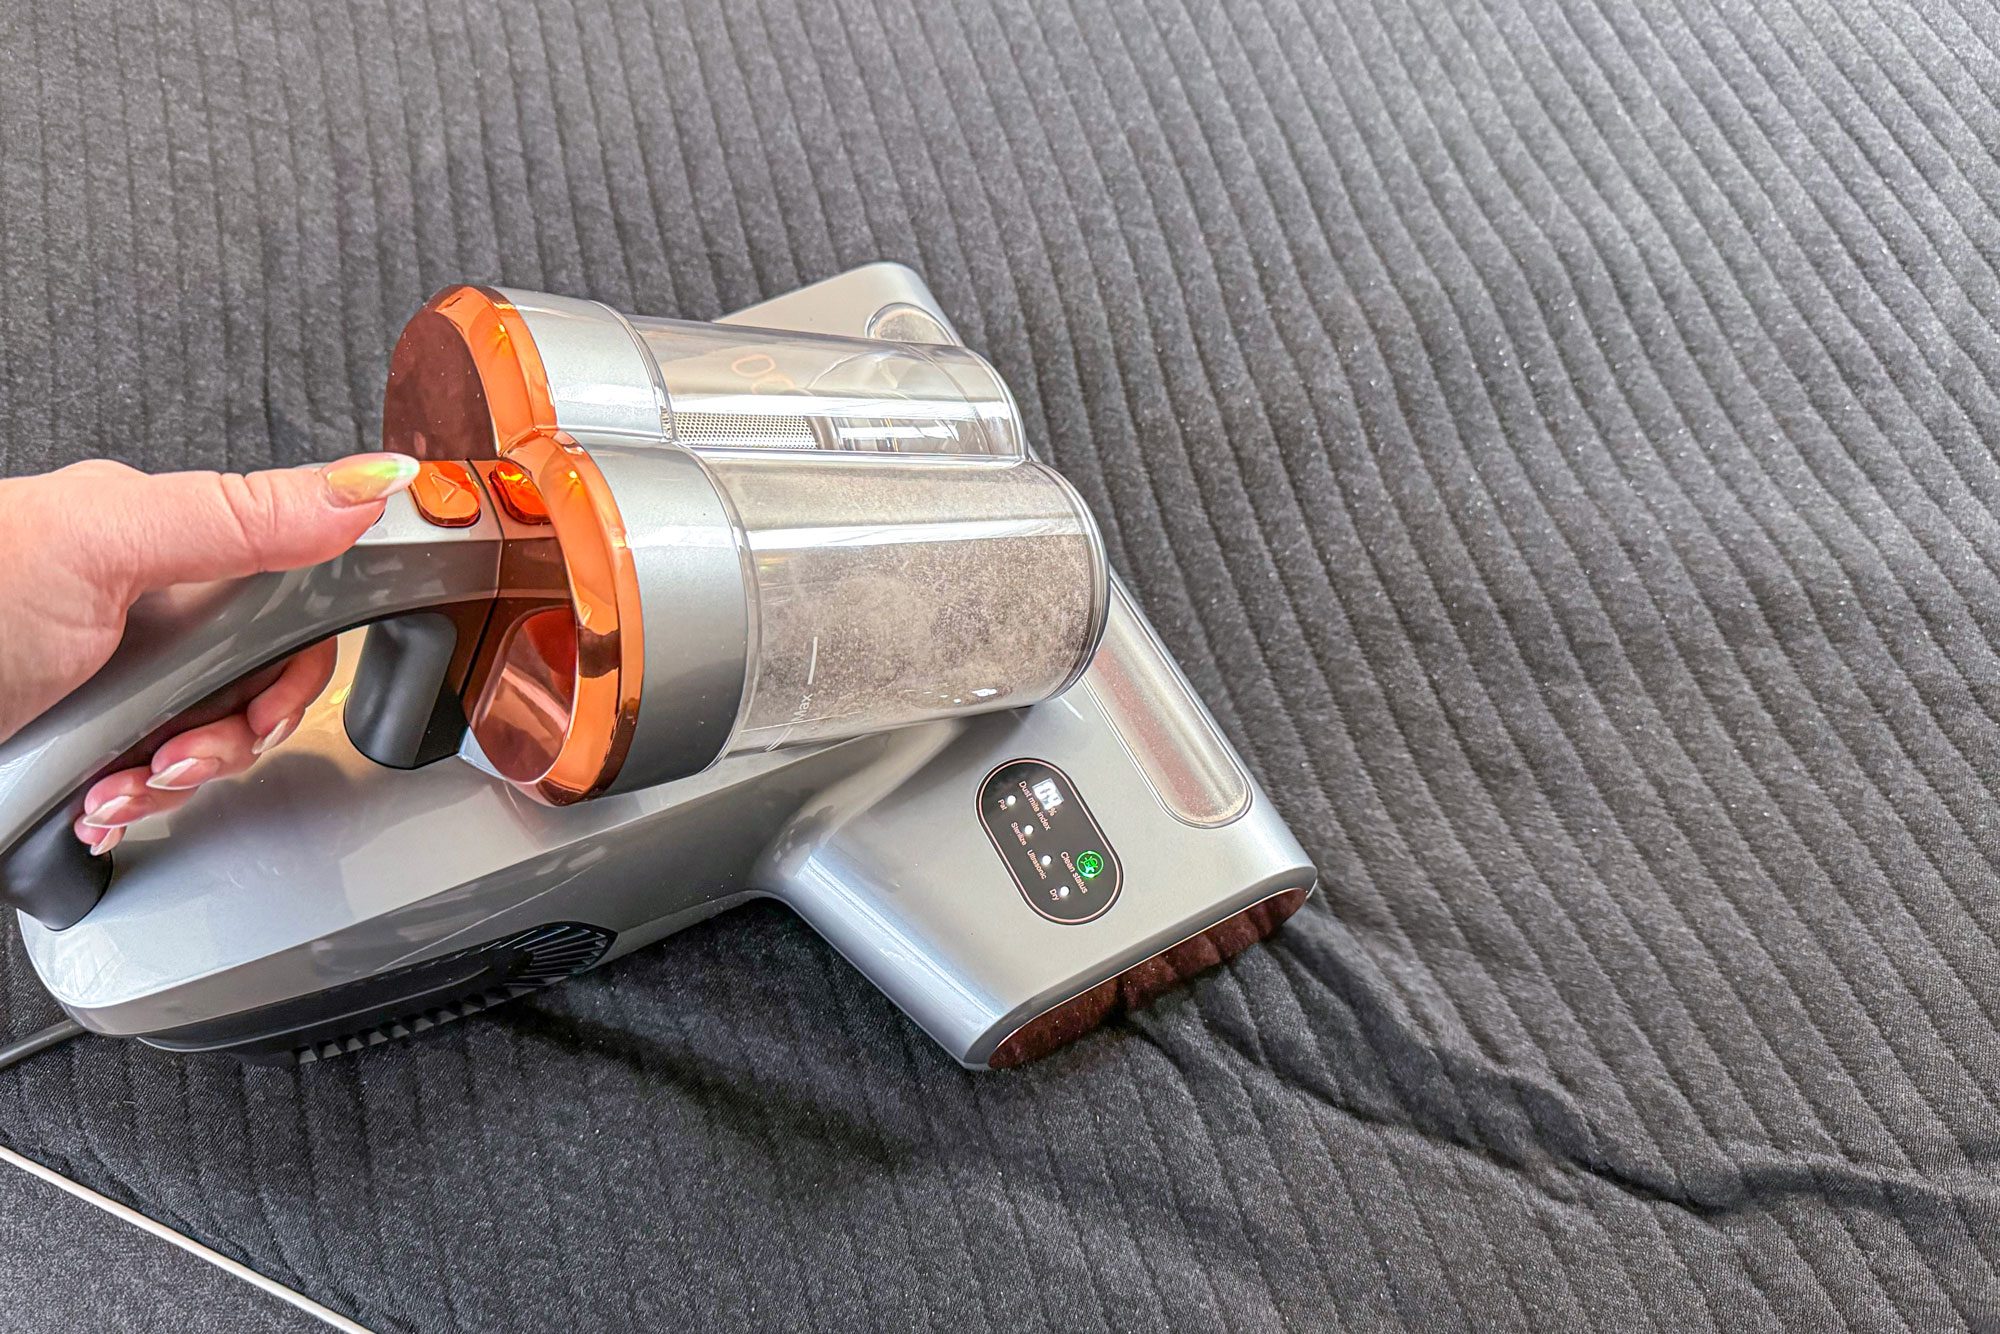 JIGOO Introduces Mattress Vacuum T600, a Dust Mite Terminator